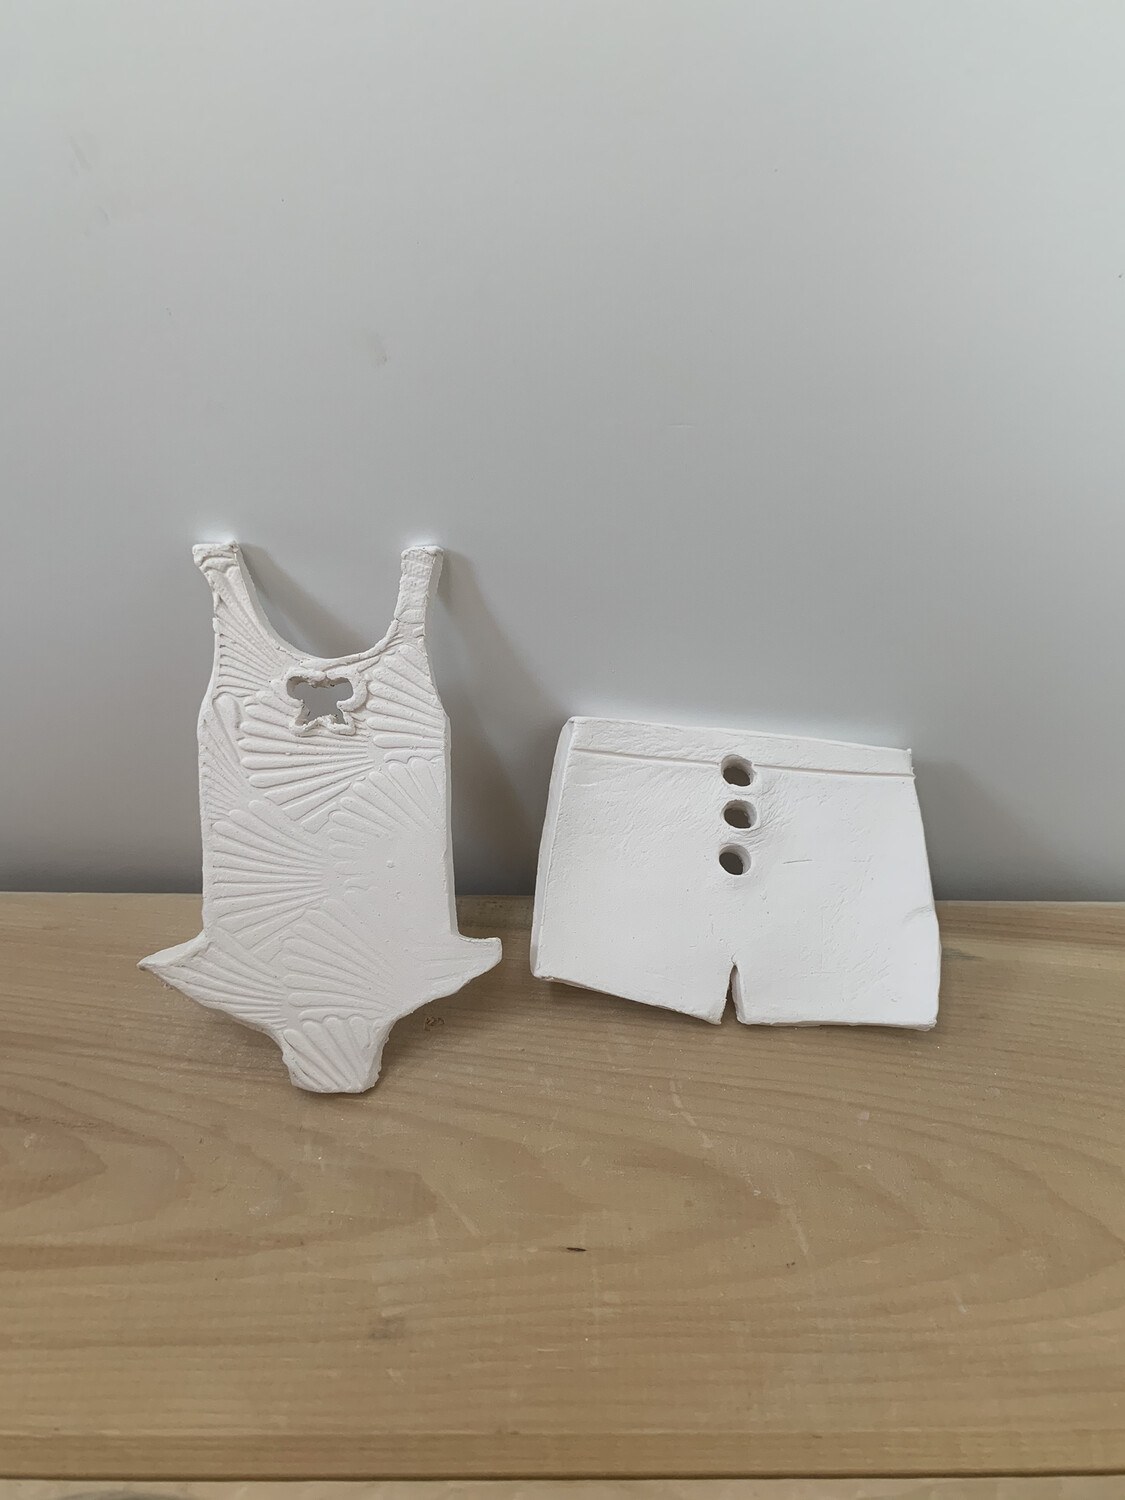 NO FIRE Paint Your Own Pottery Kit - 
Ceramic Set of 2 Beach Bathing Suit Christmas Ornaments - Acrylic Paint Kit